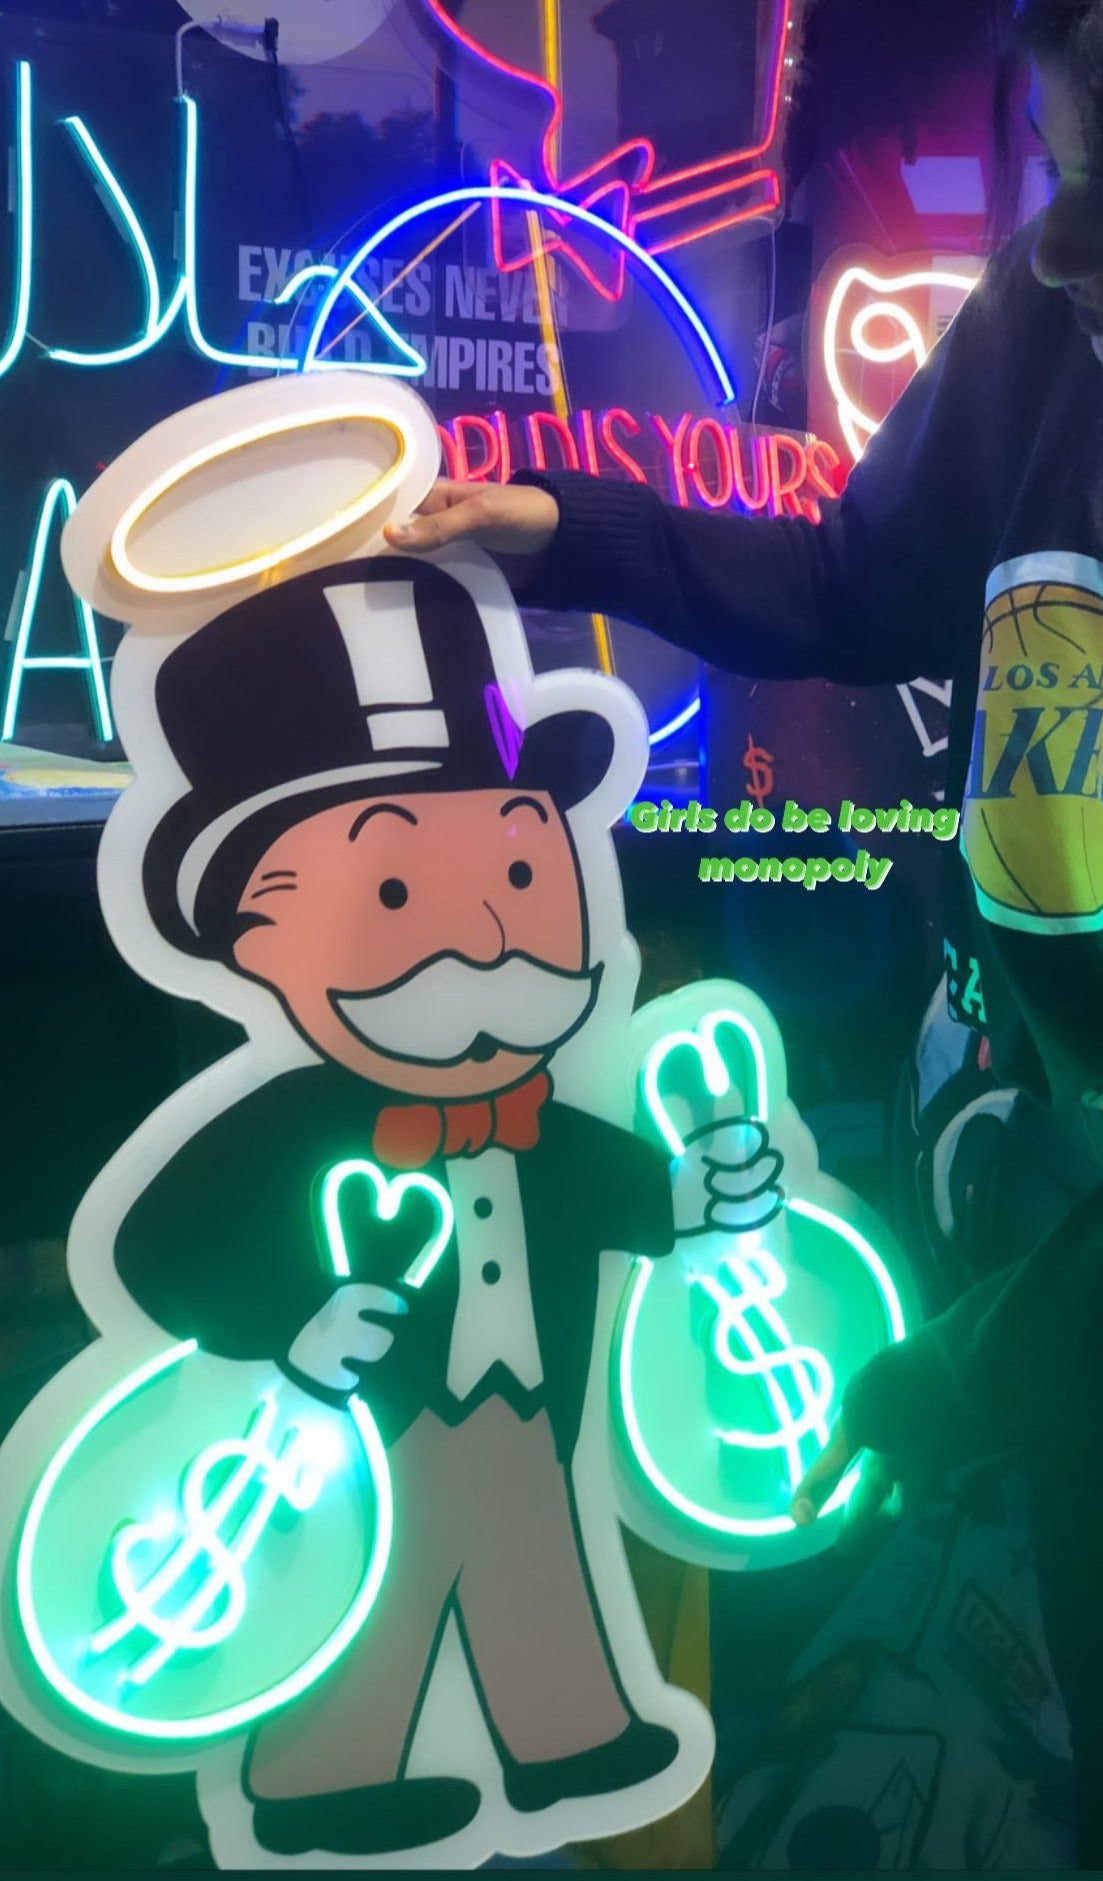 Mr Money Plexiglass + Neon